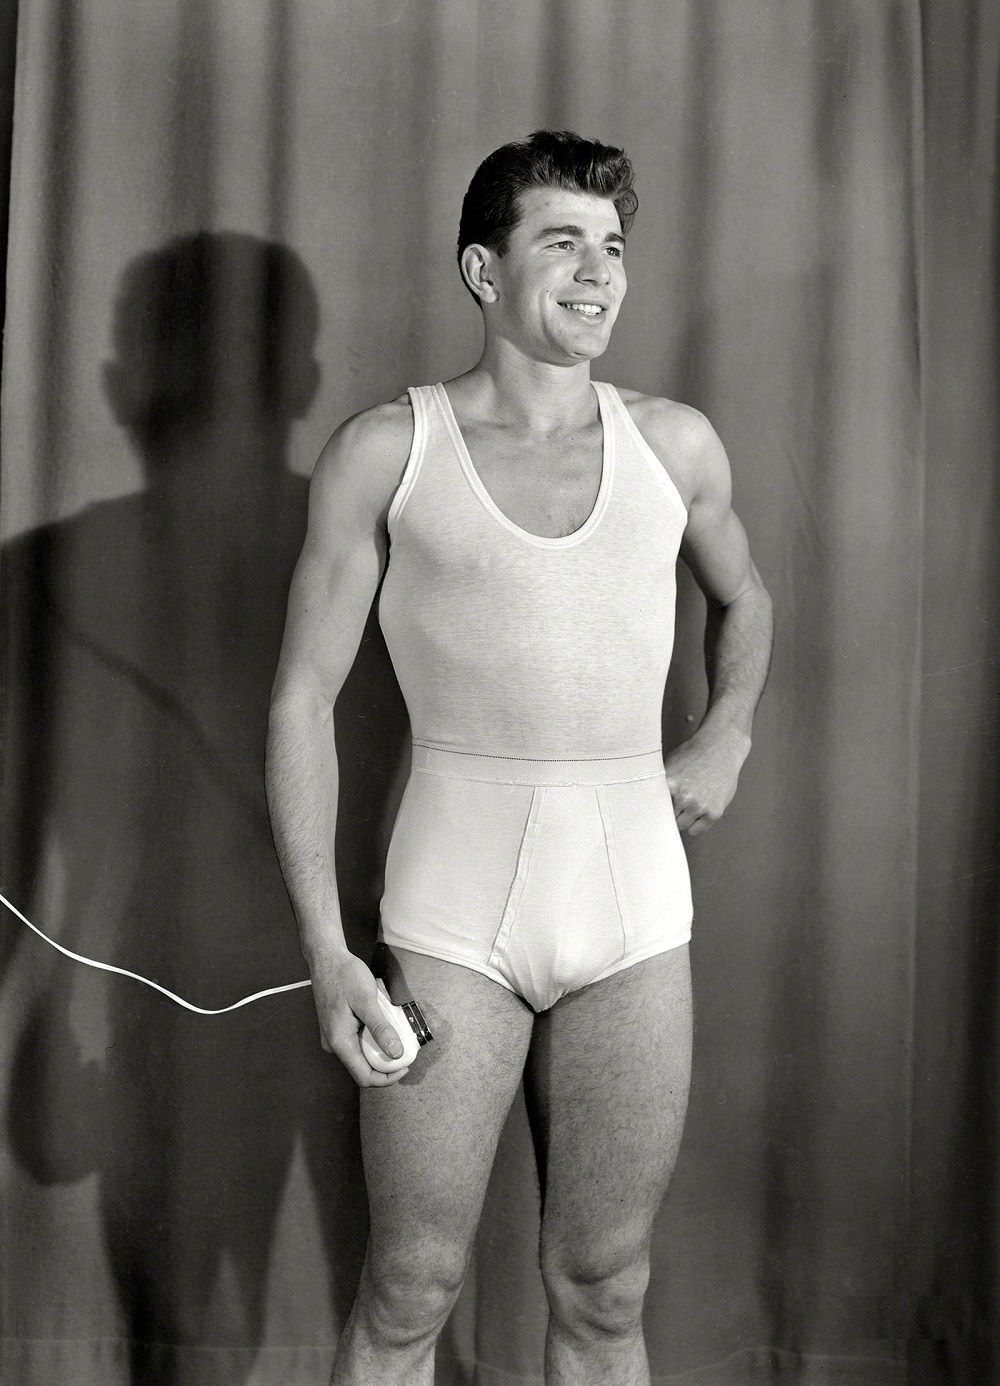 Men's underwear being modeled, Wellington, New Zealand circa 1958